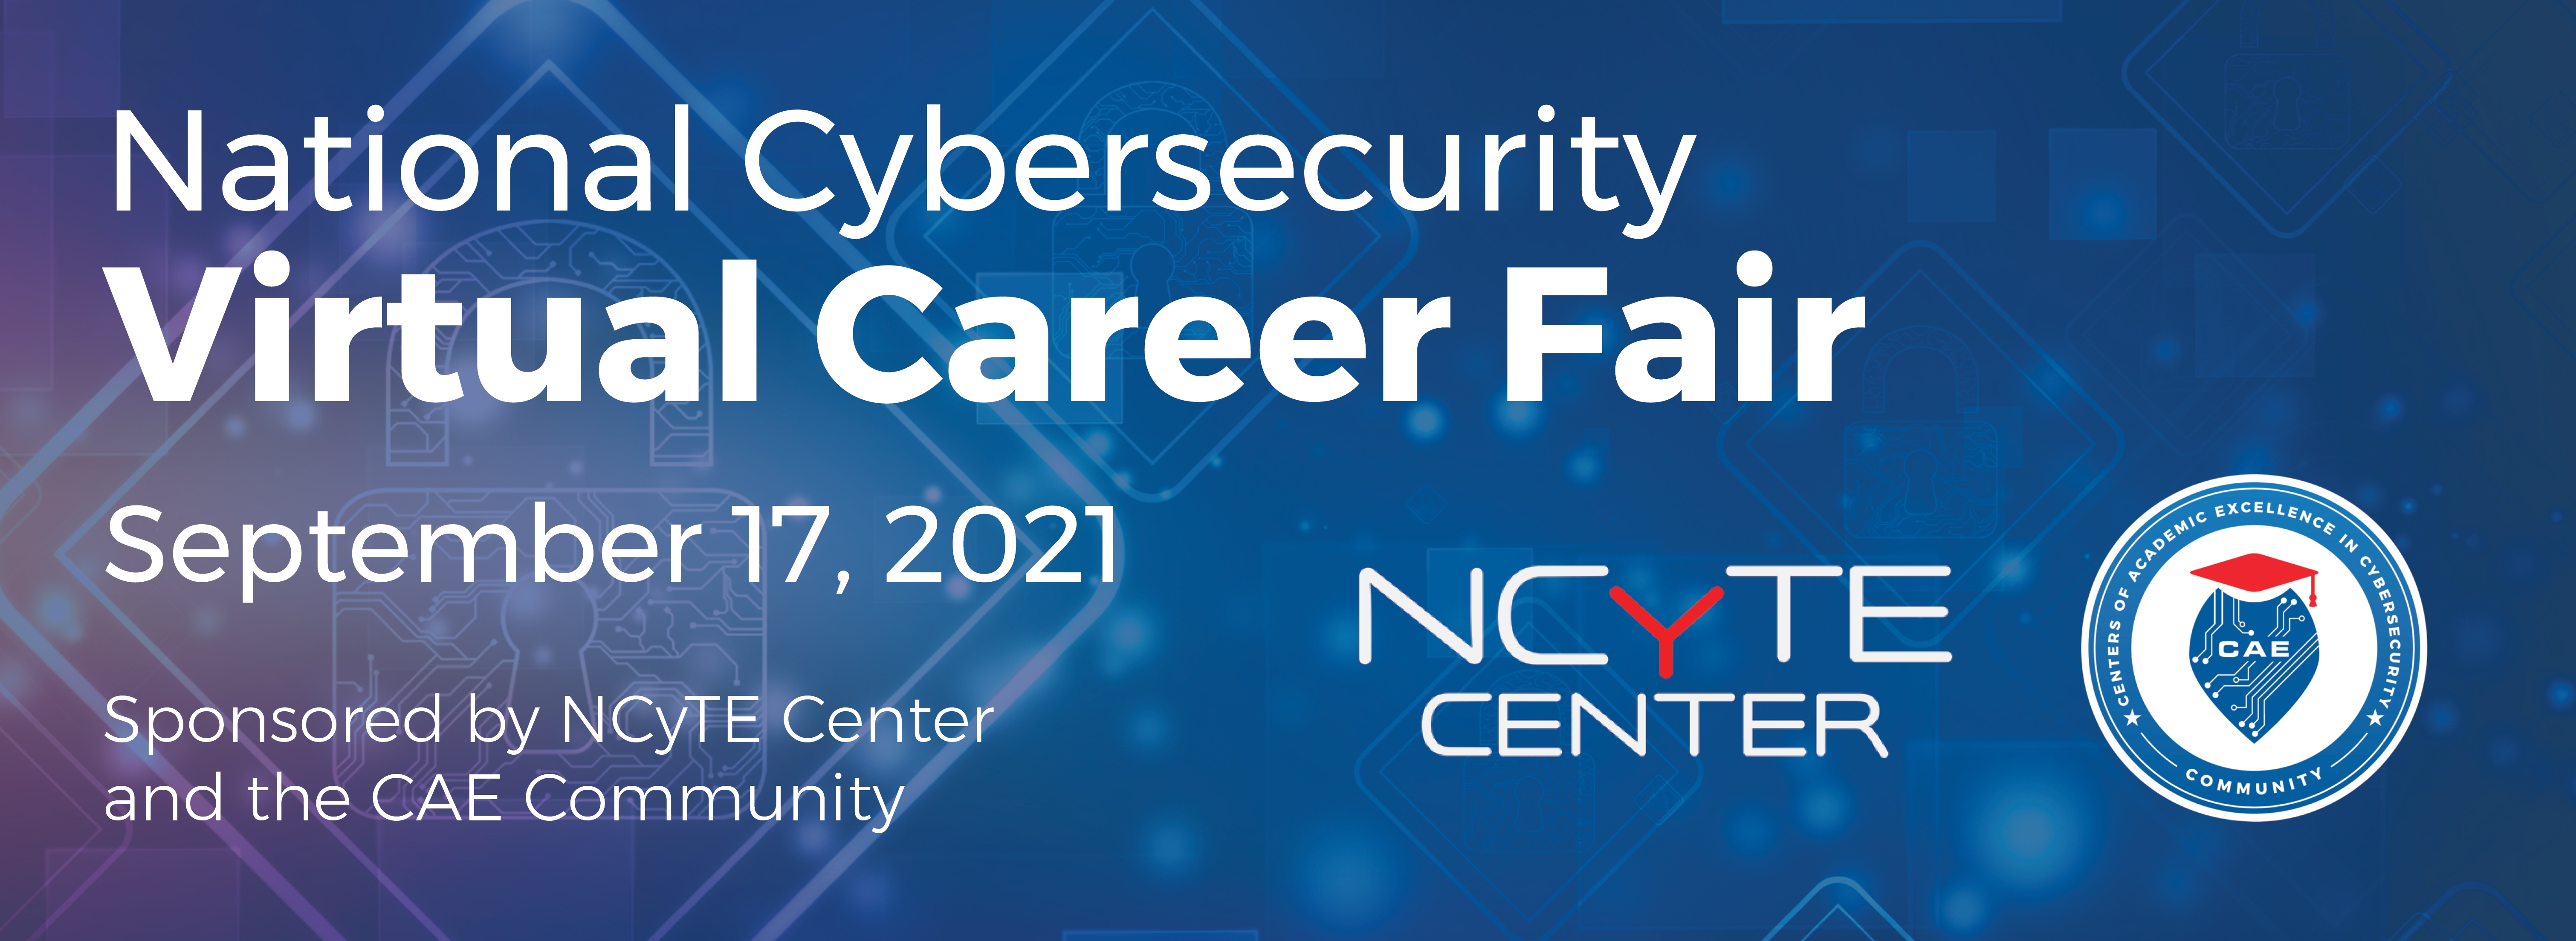 National Cybersecurity Virtual Career Fair